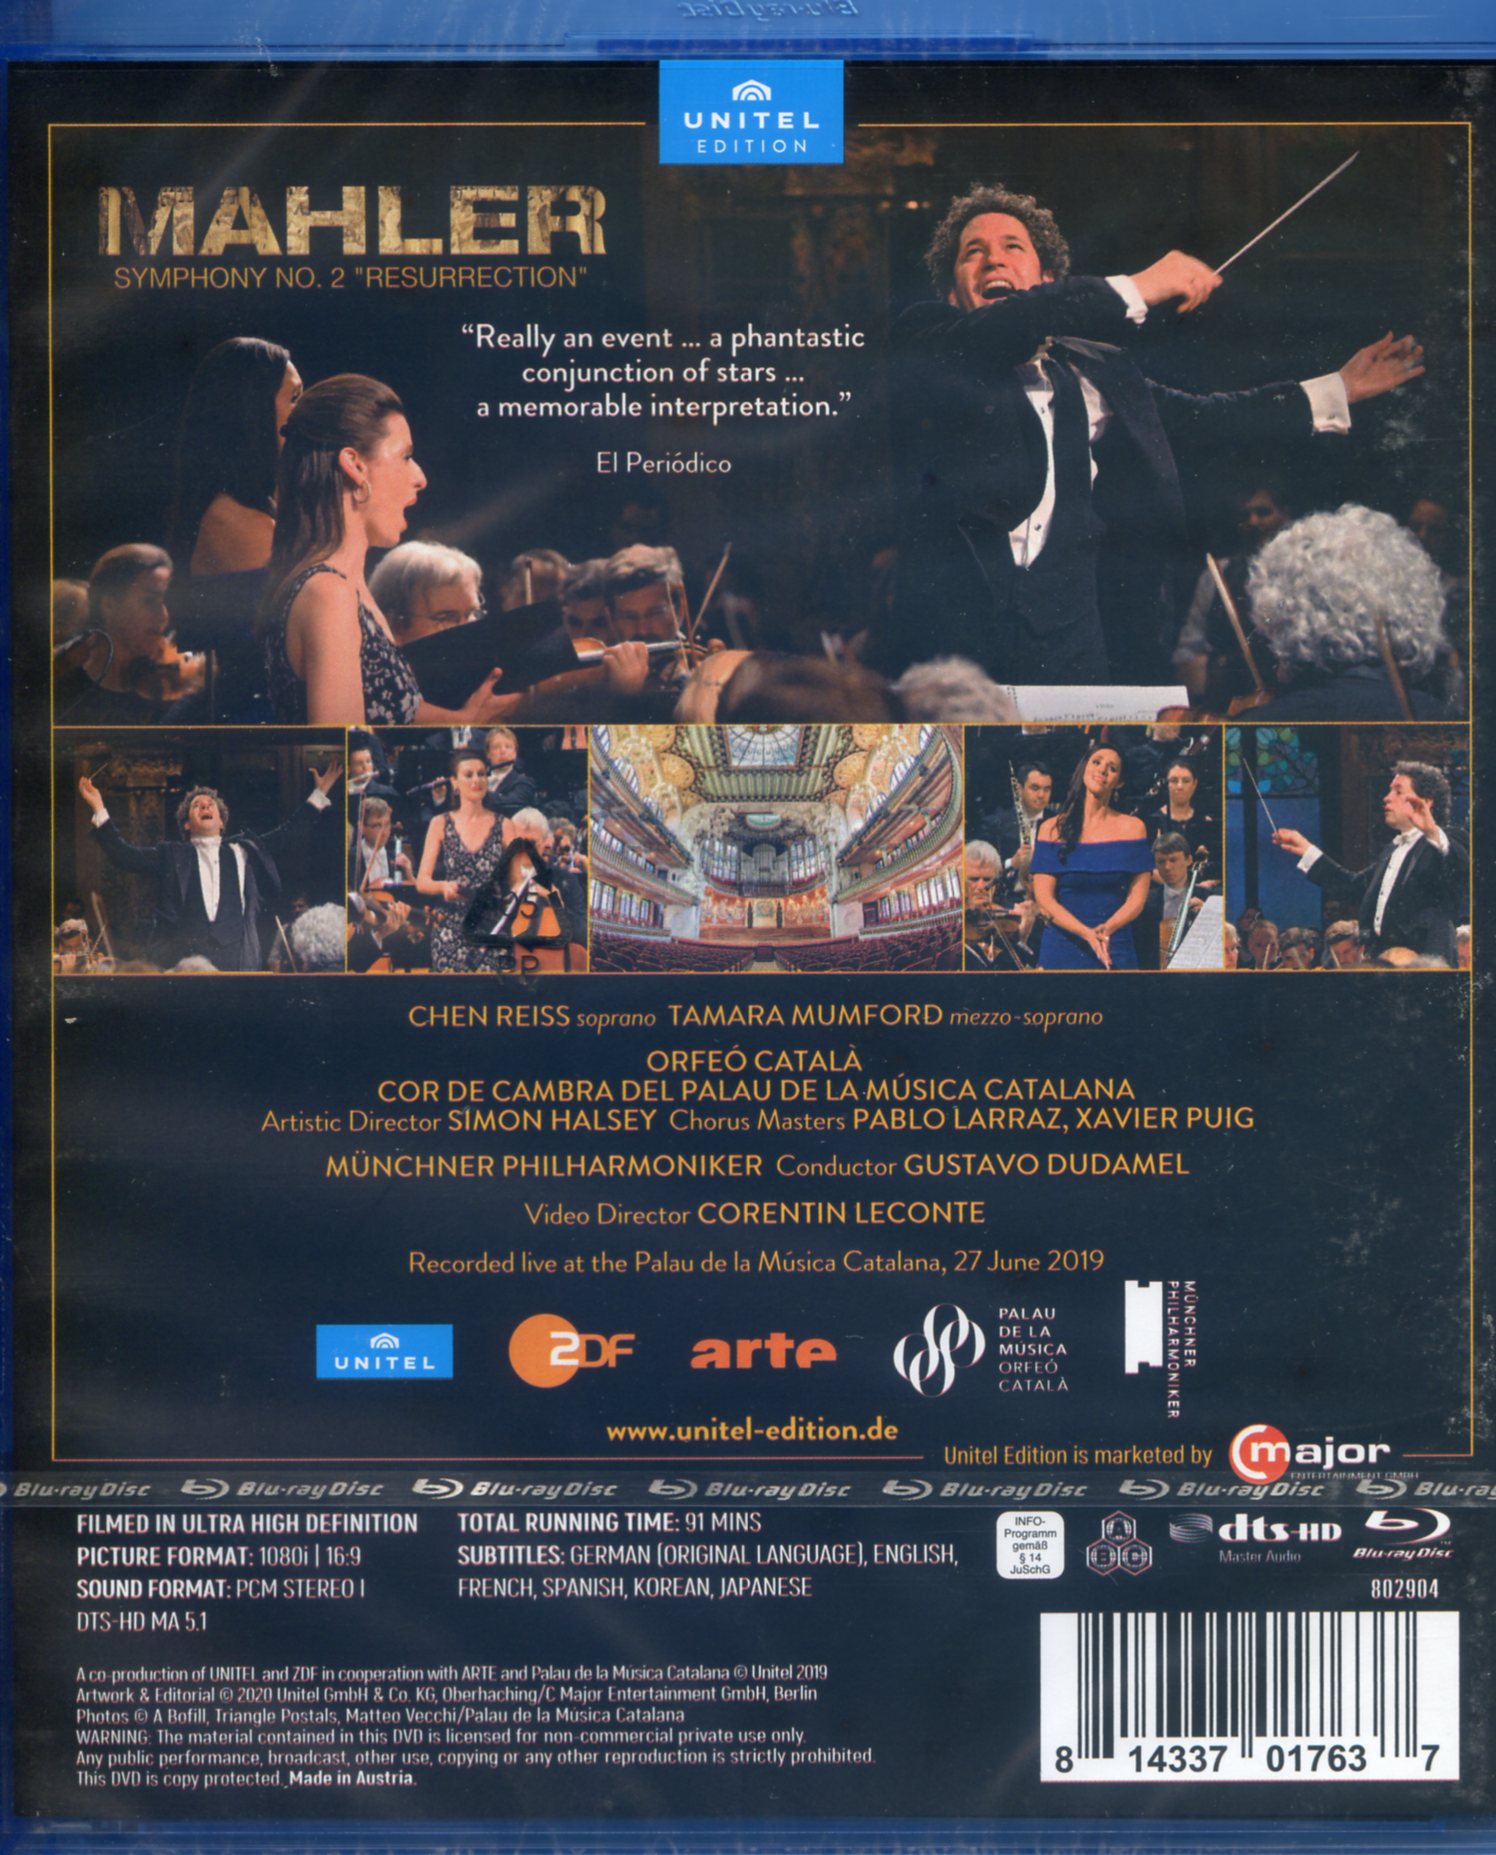 Gustavo Dudamel 말러: 교향곡 2번 '부활' (Mahler: Symphony No. 2 'Resurrection')